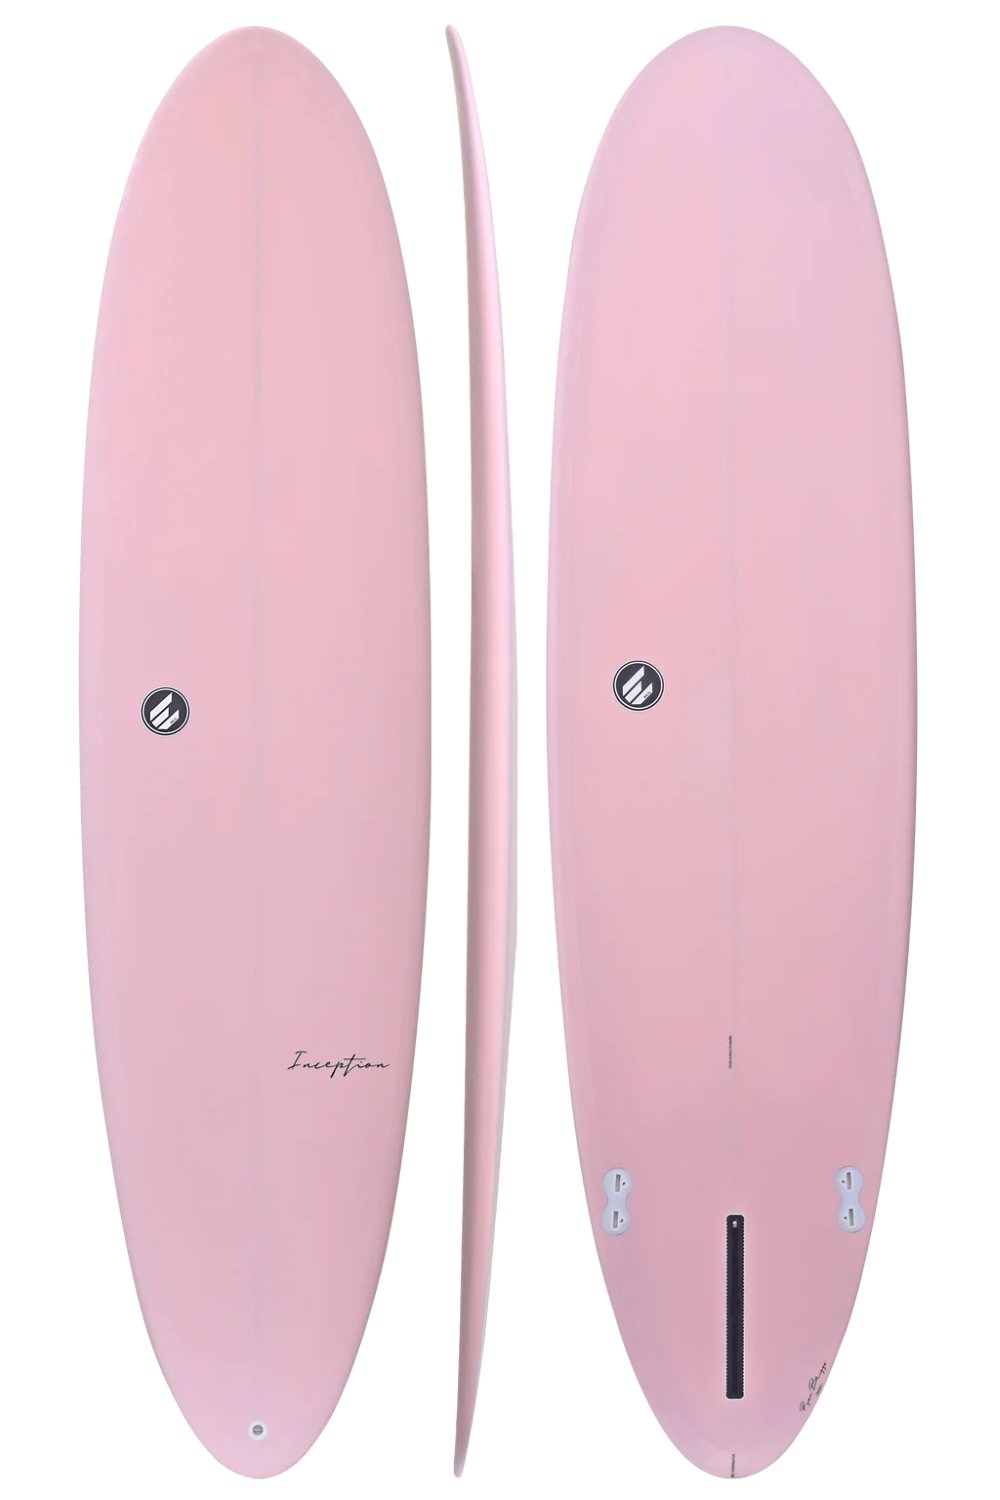 ECS 7'6 Inception (Pale Pink) - KS Boardriders Surf Shop